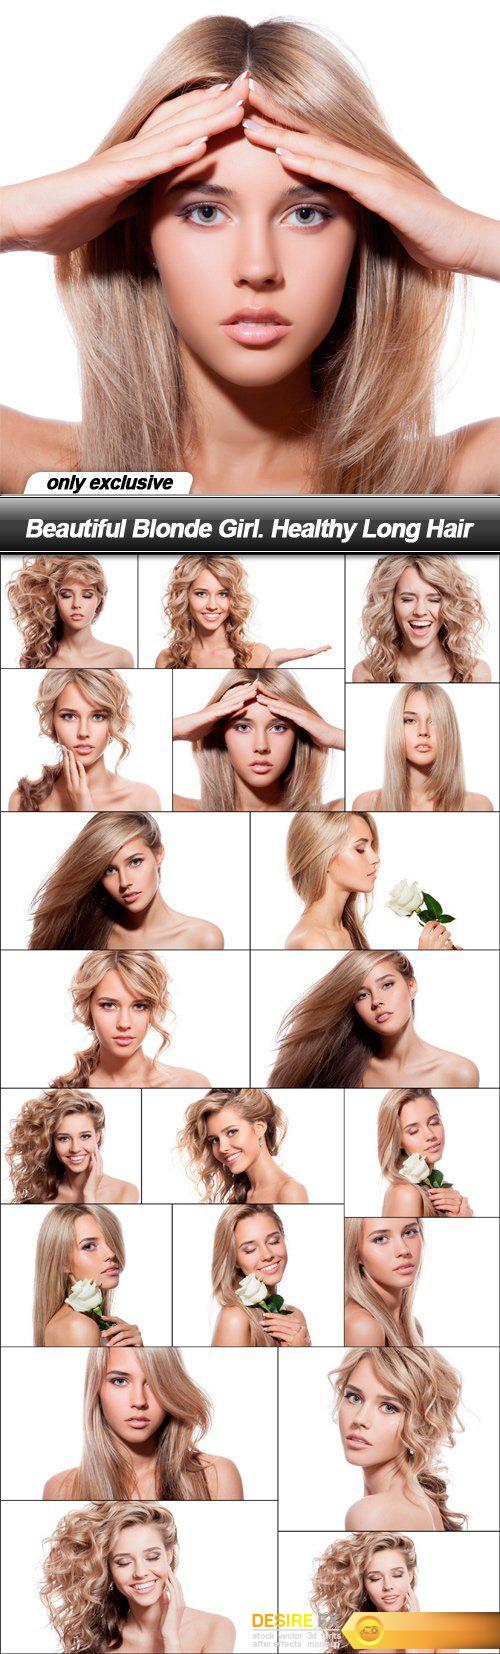 Beautiful Blonde Girl. Healthy Long Hair - 20 UHQ JPEG